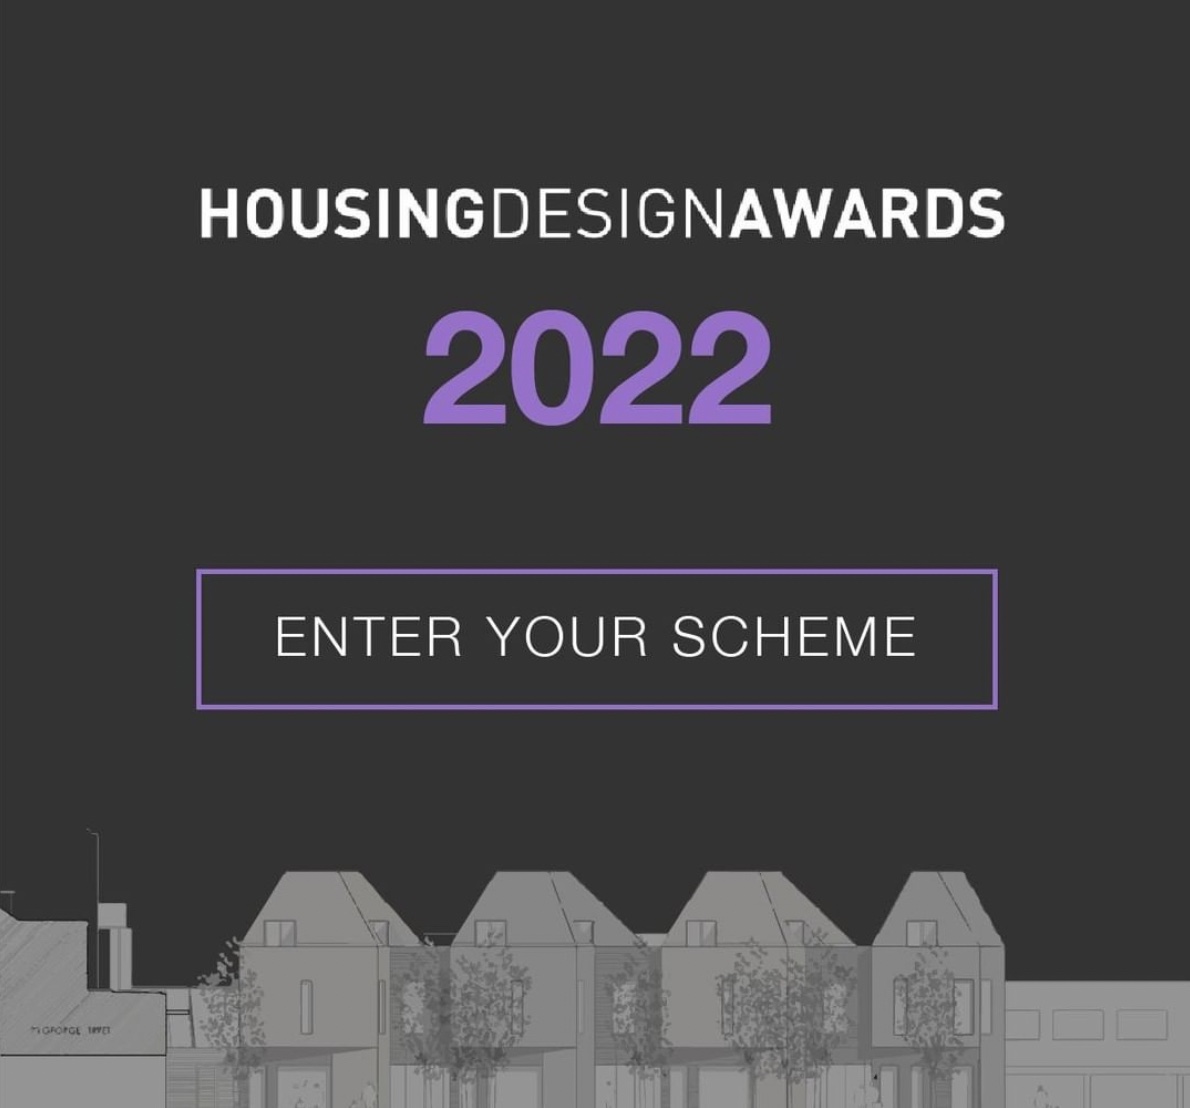 Housing Design Awards 2022 open for entries!